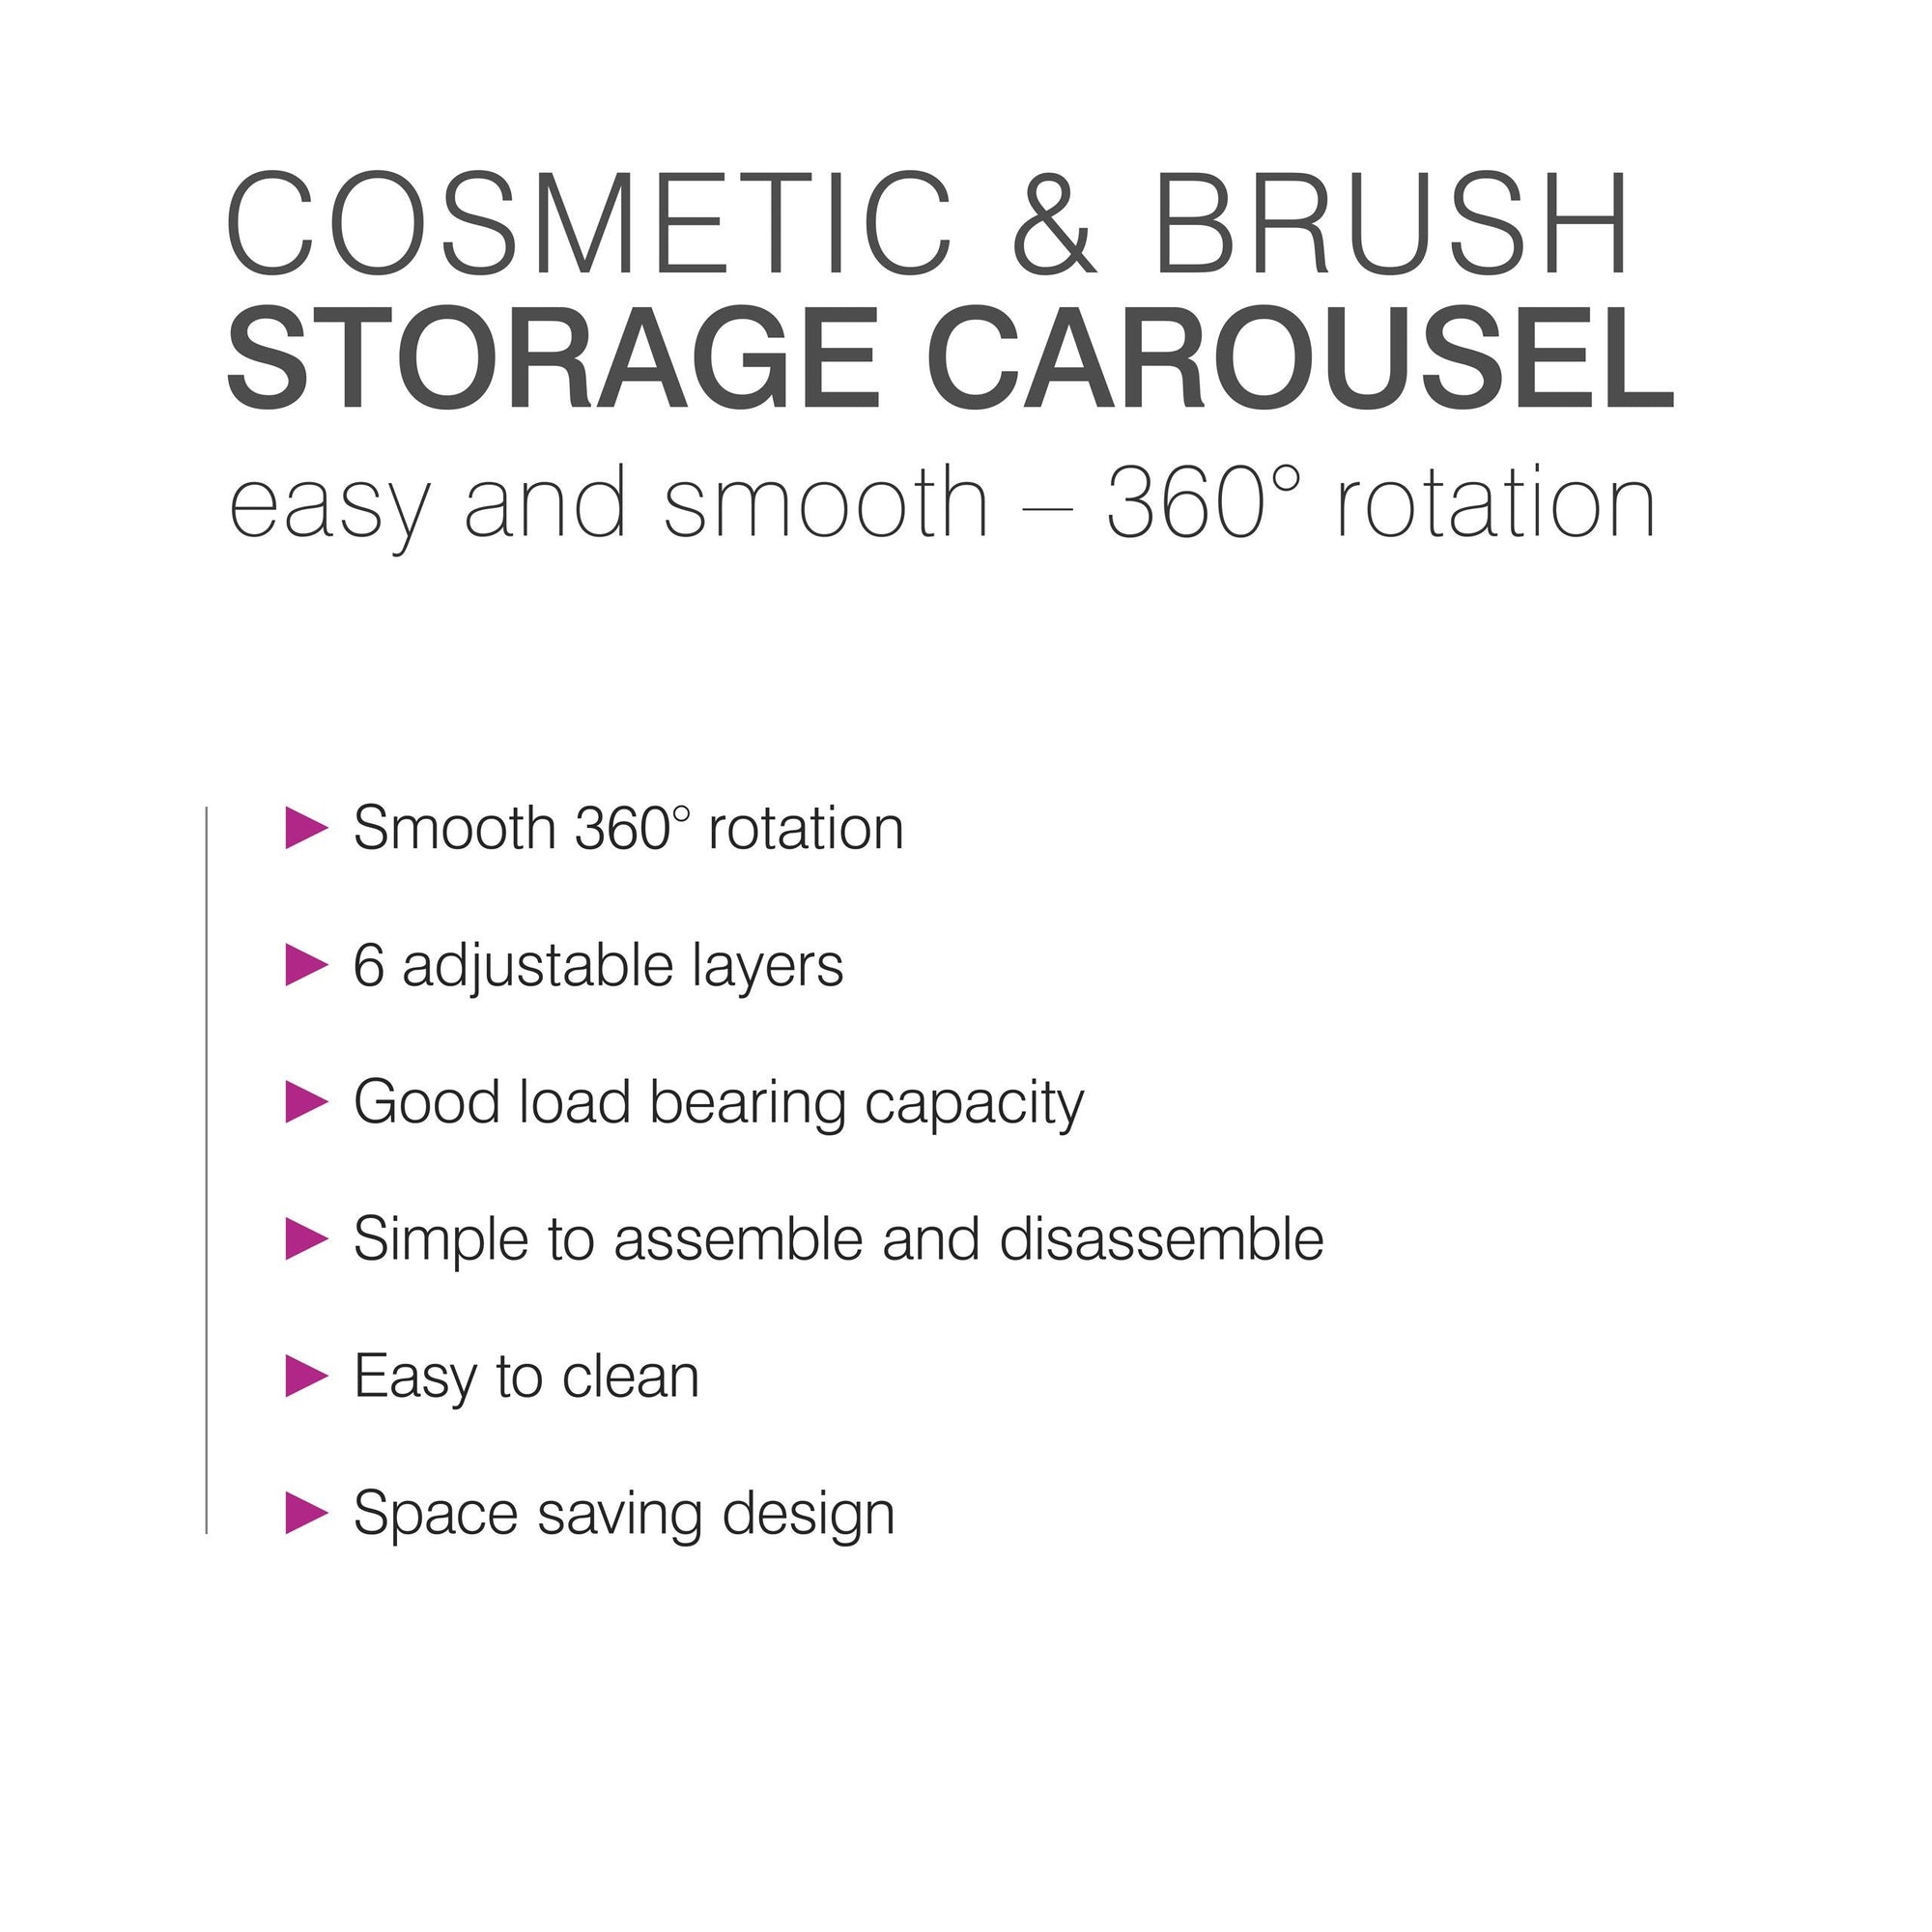 Cosmetic & Brush Storage Carousel